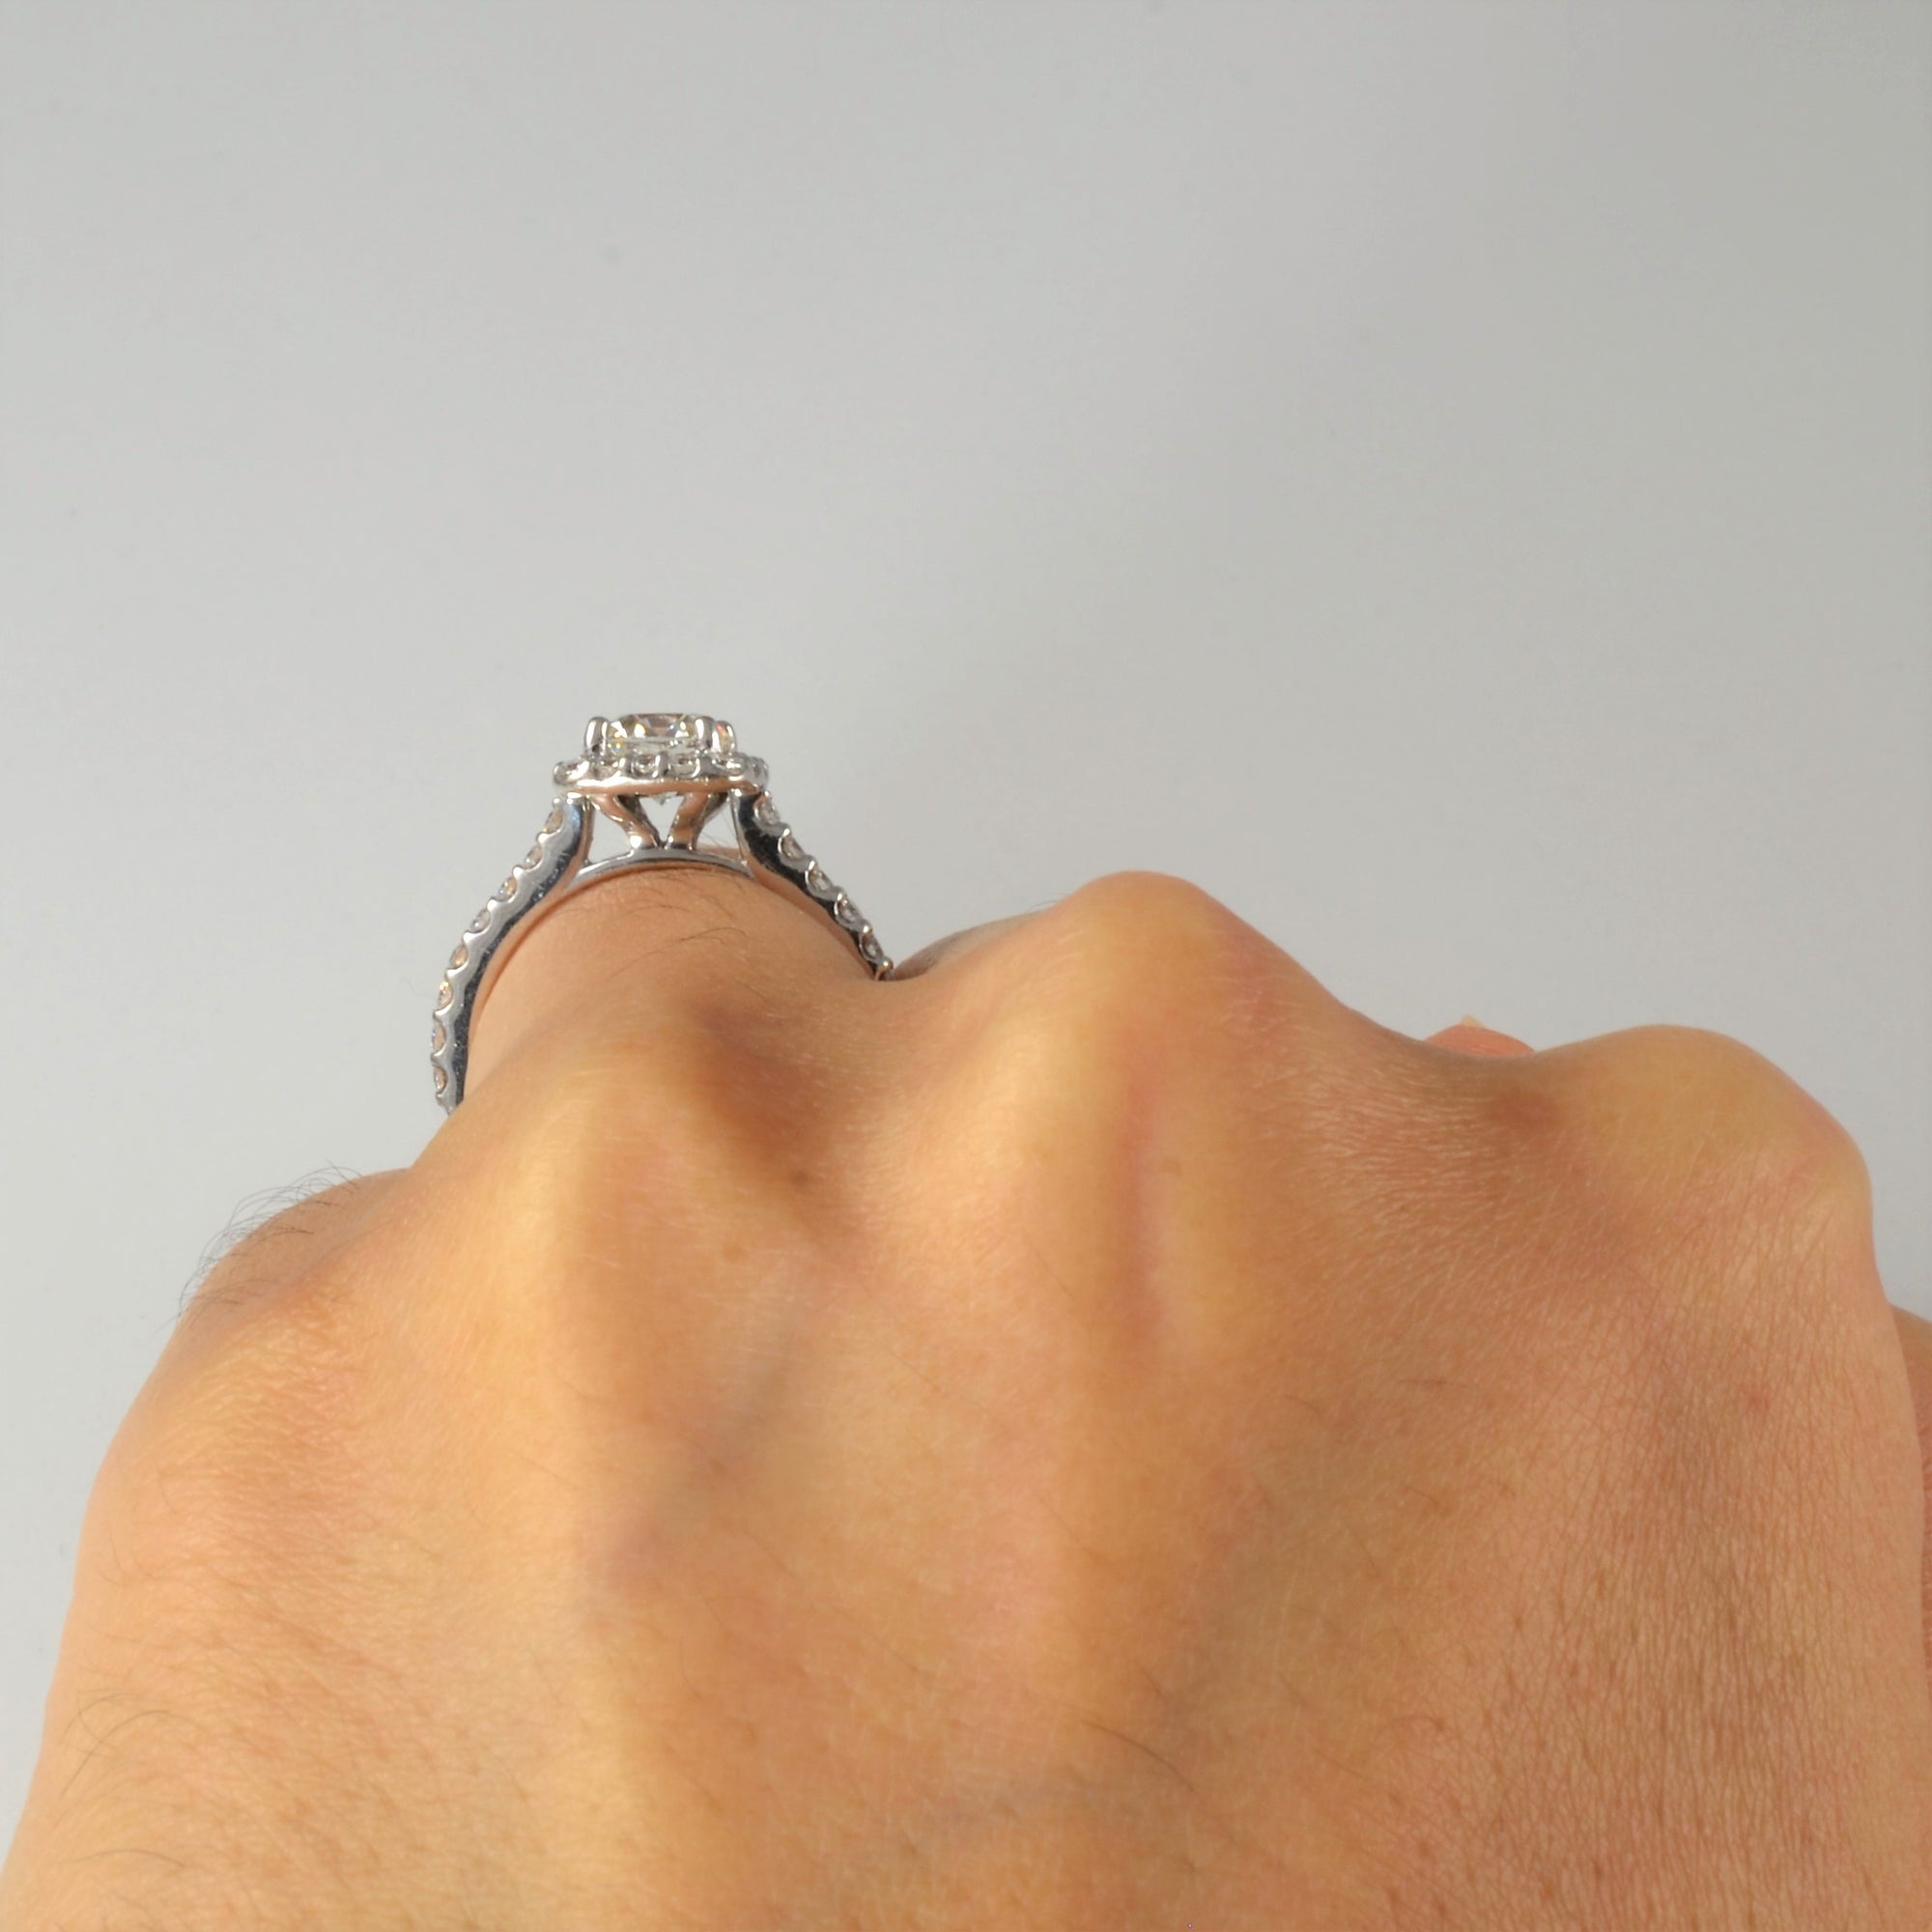 'Ritani' Halo Diamond Engagement Ring | 1.29ctw | SZ 4.75 |